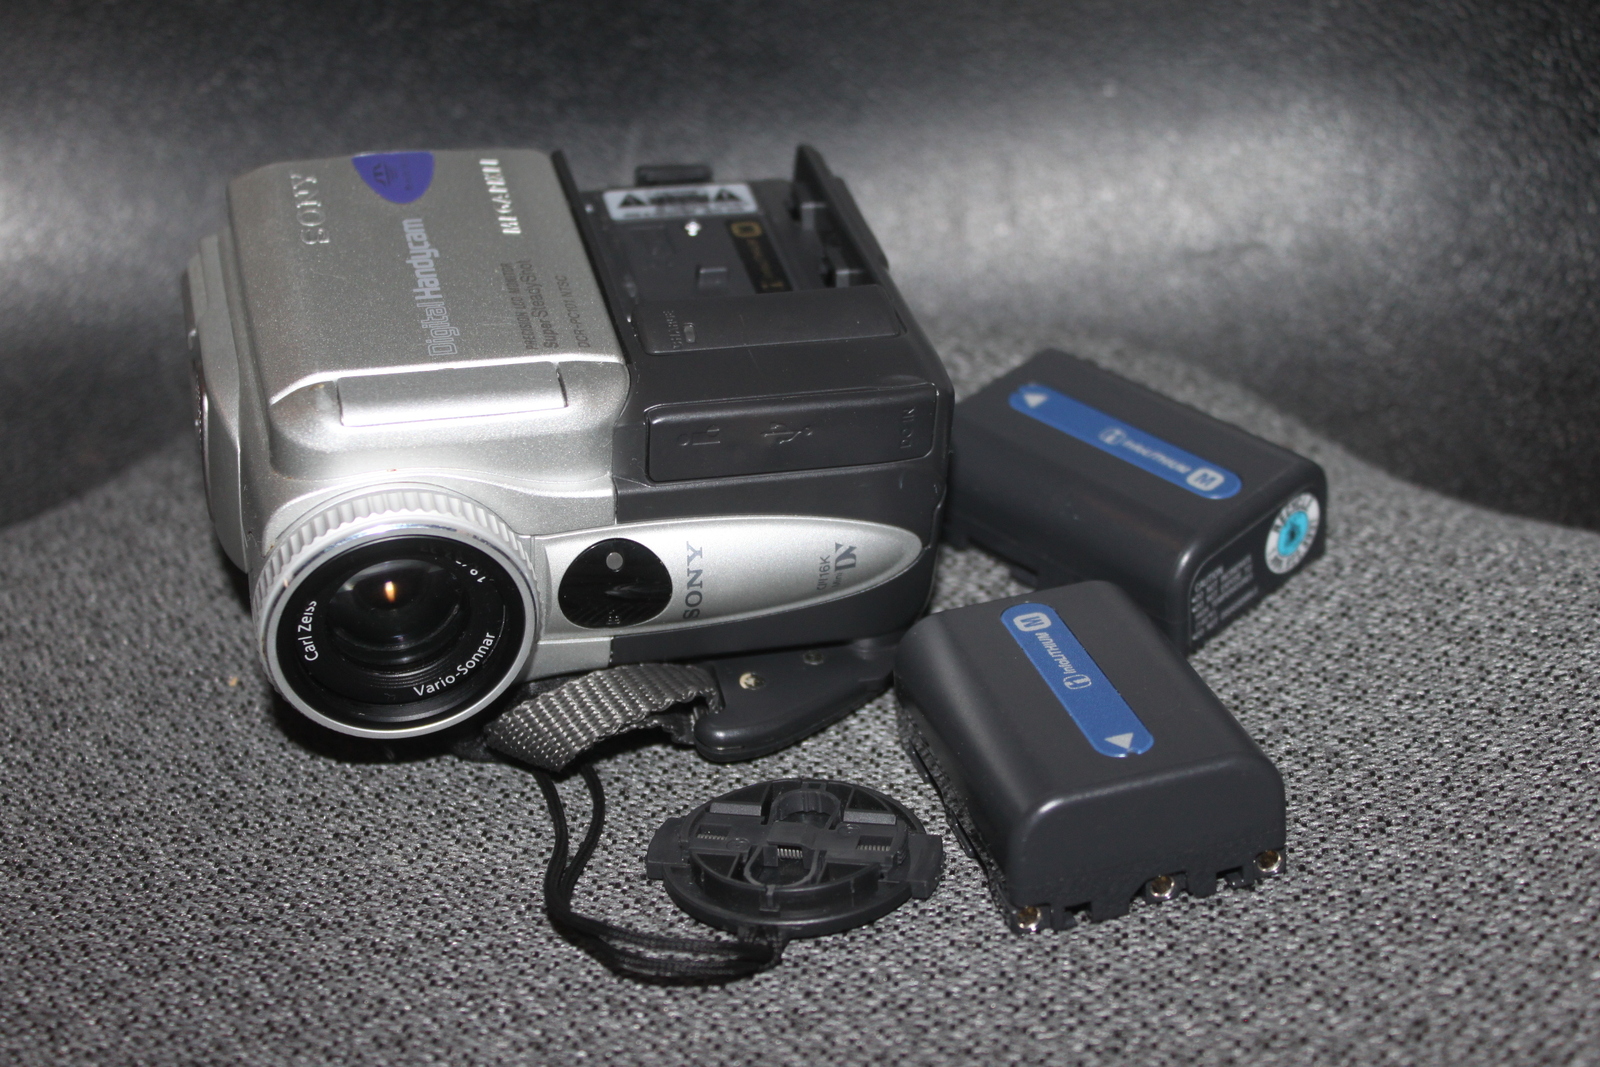 Sony DCR-PC101 Digital Video Camera MiniDV and 50 similar items